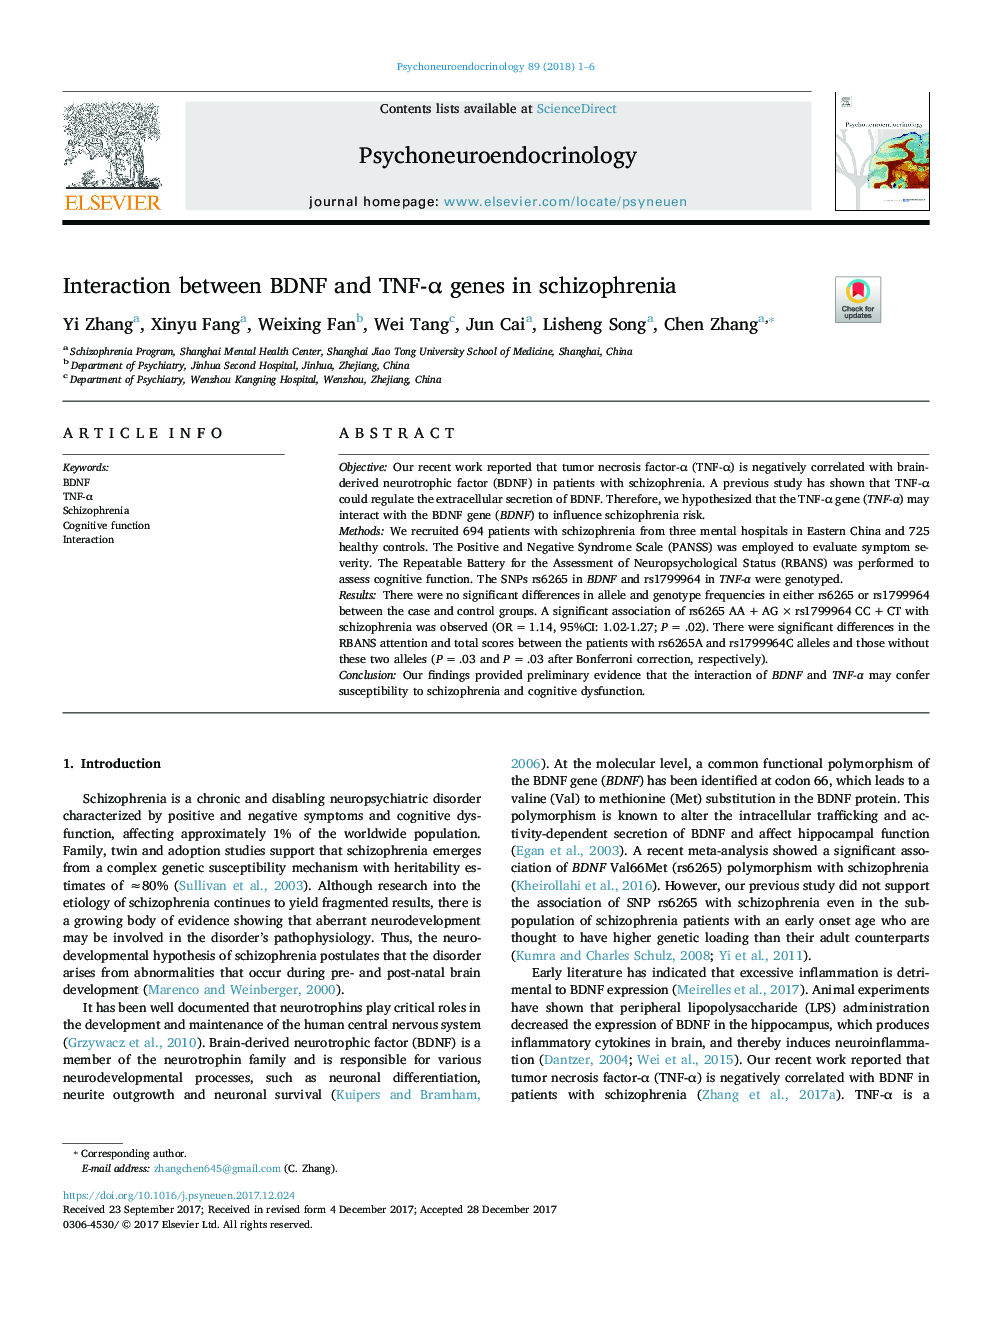 Interaction between BDNF and TNF-Î± genes in schizophrenia